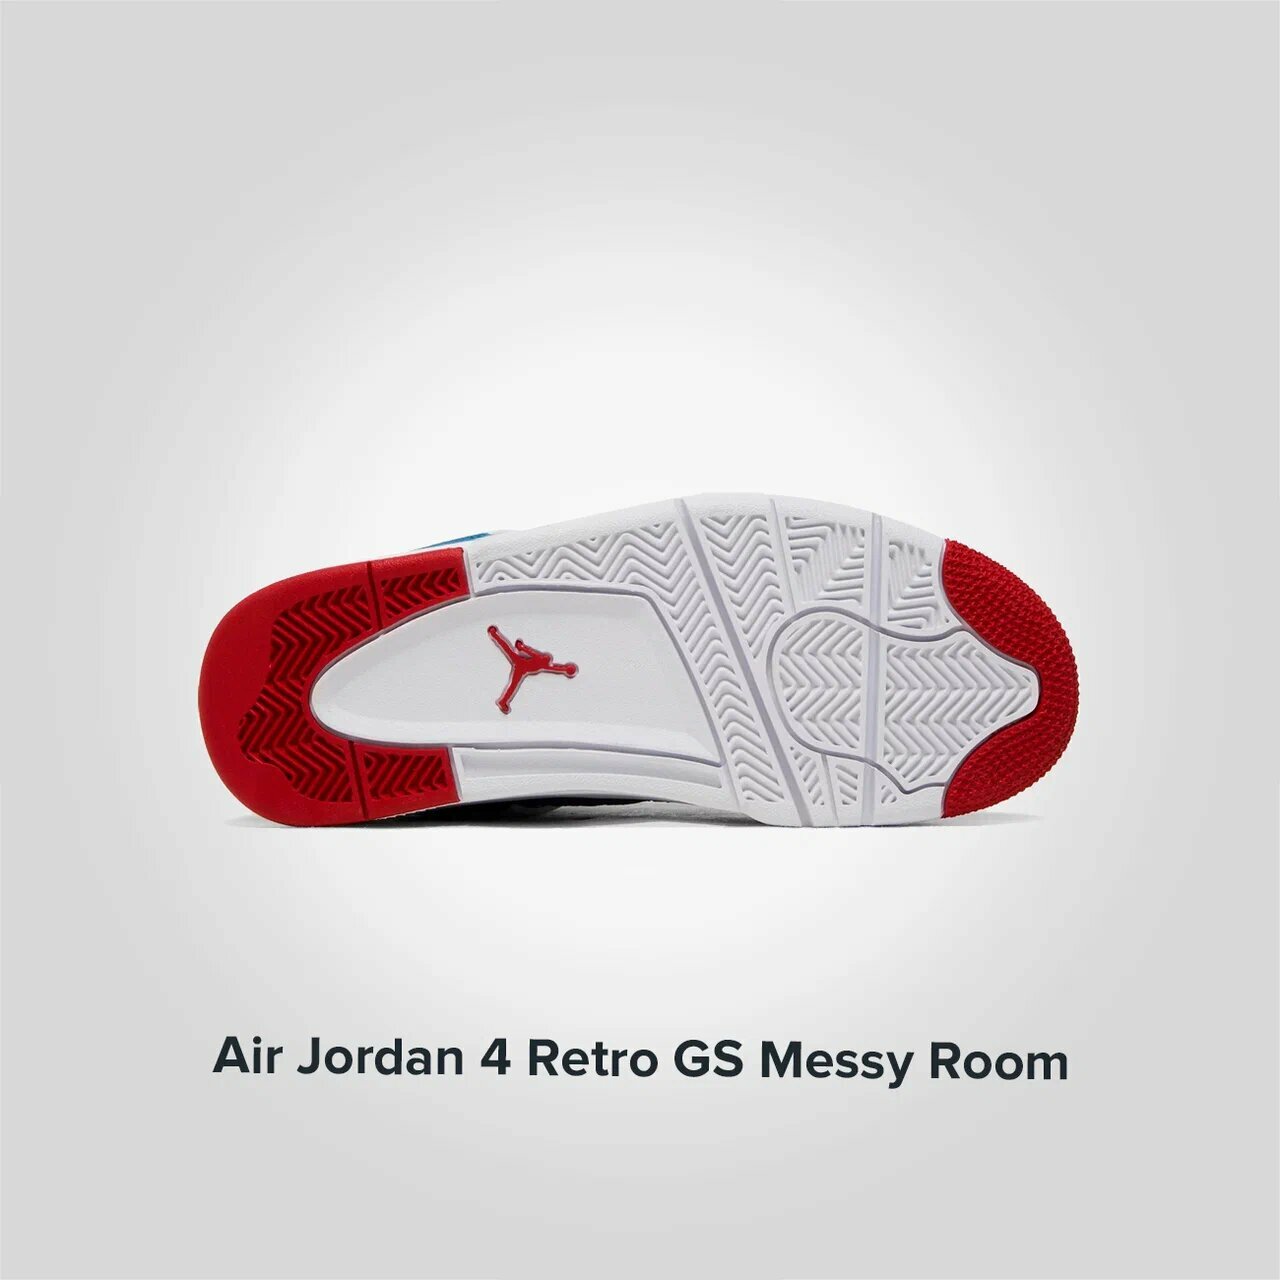 Jordan 4 Retro GS Messy Room